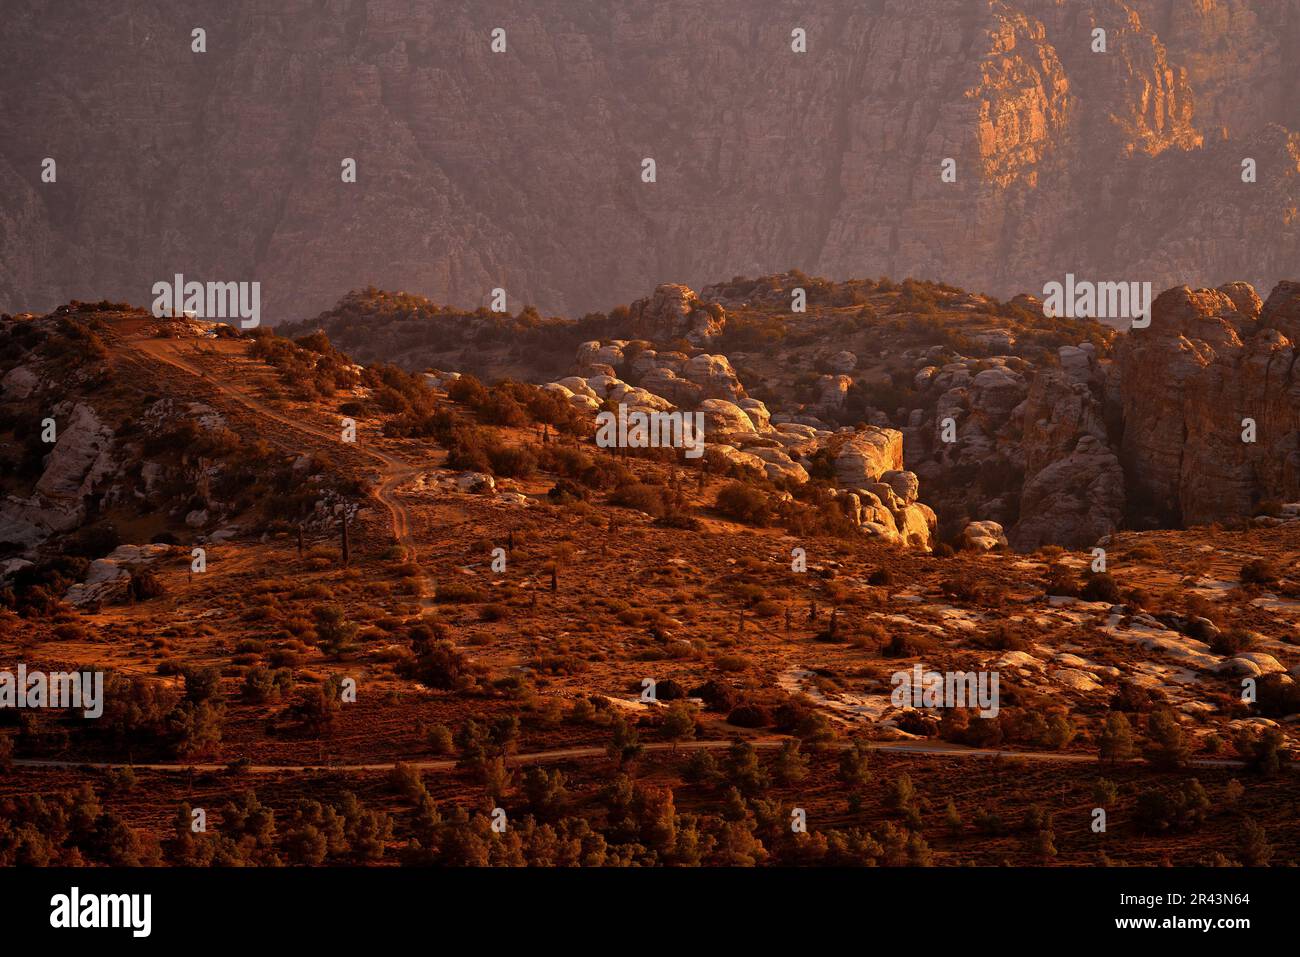 Jordan sunset landscape. Rocky mountain with orange evening in Dana Biosphere Reserve, Jorda. Traveling in Arabia. Stones and valley in Dana nature, w Stock Photo